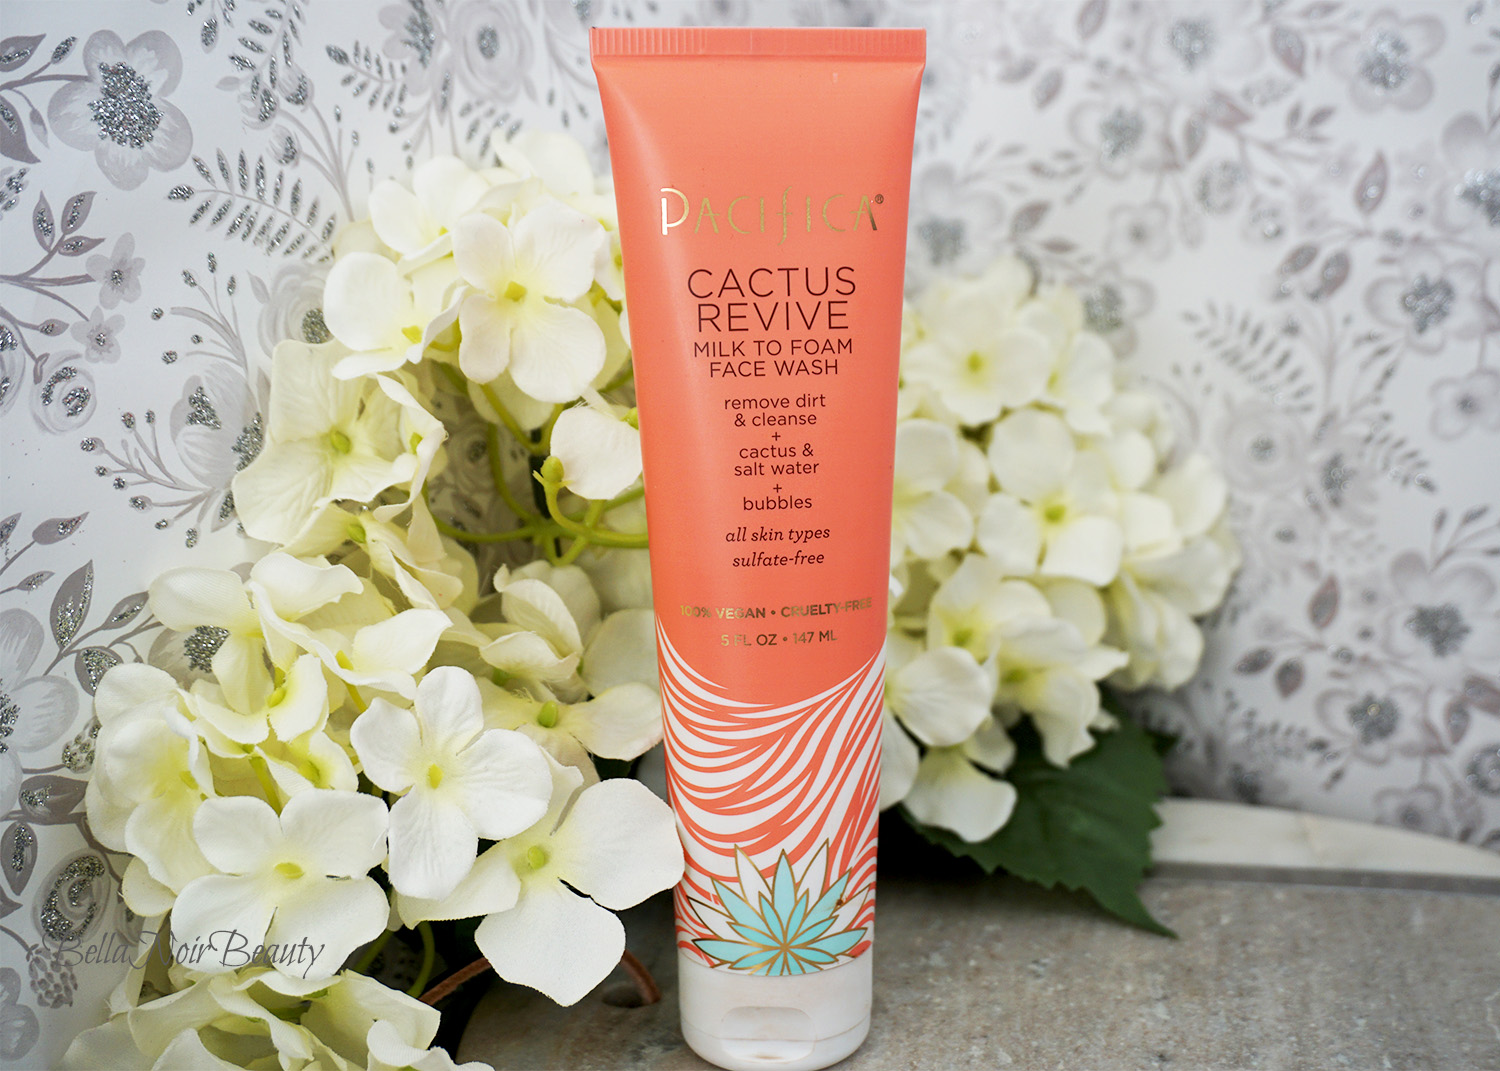 Pacifica Cactus Revive Milk to Foam Face Wash | bellanoirbeauty.com